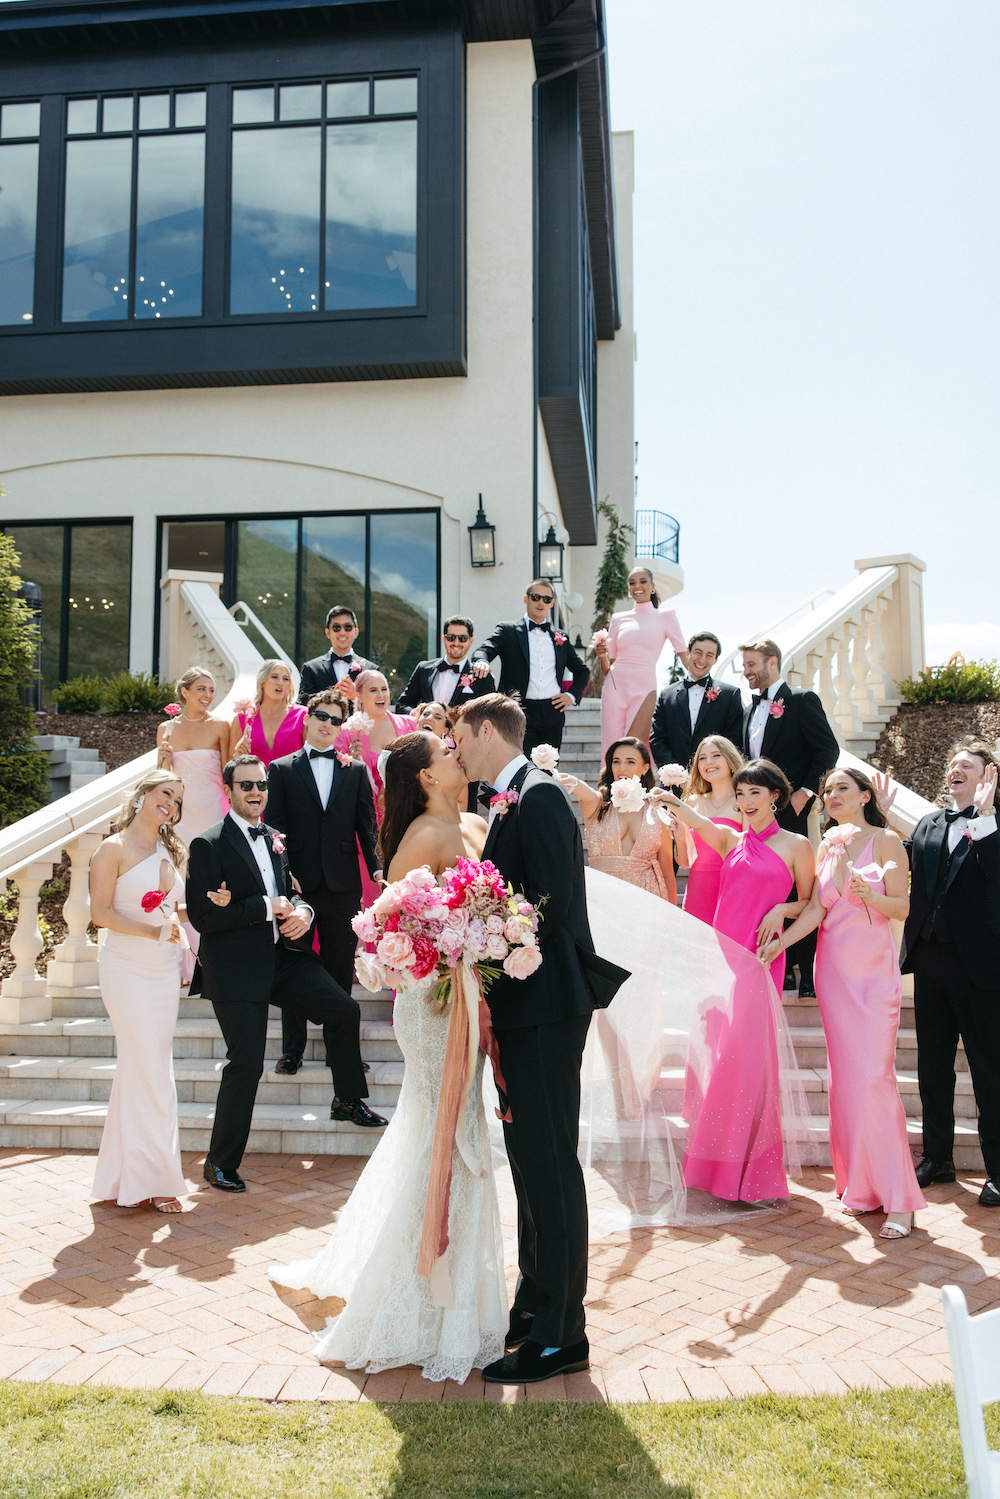 13 Reasons Why" Star Tyler Barnhardt and Adriana Schap's Dream Wedding